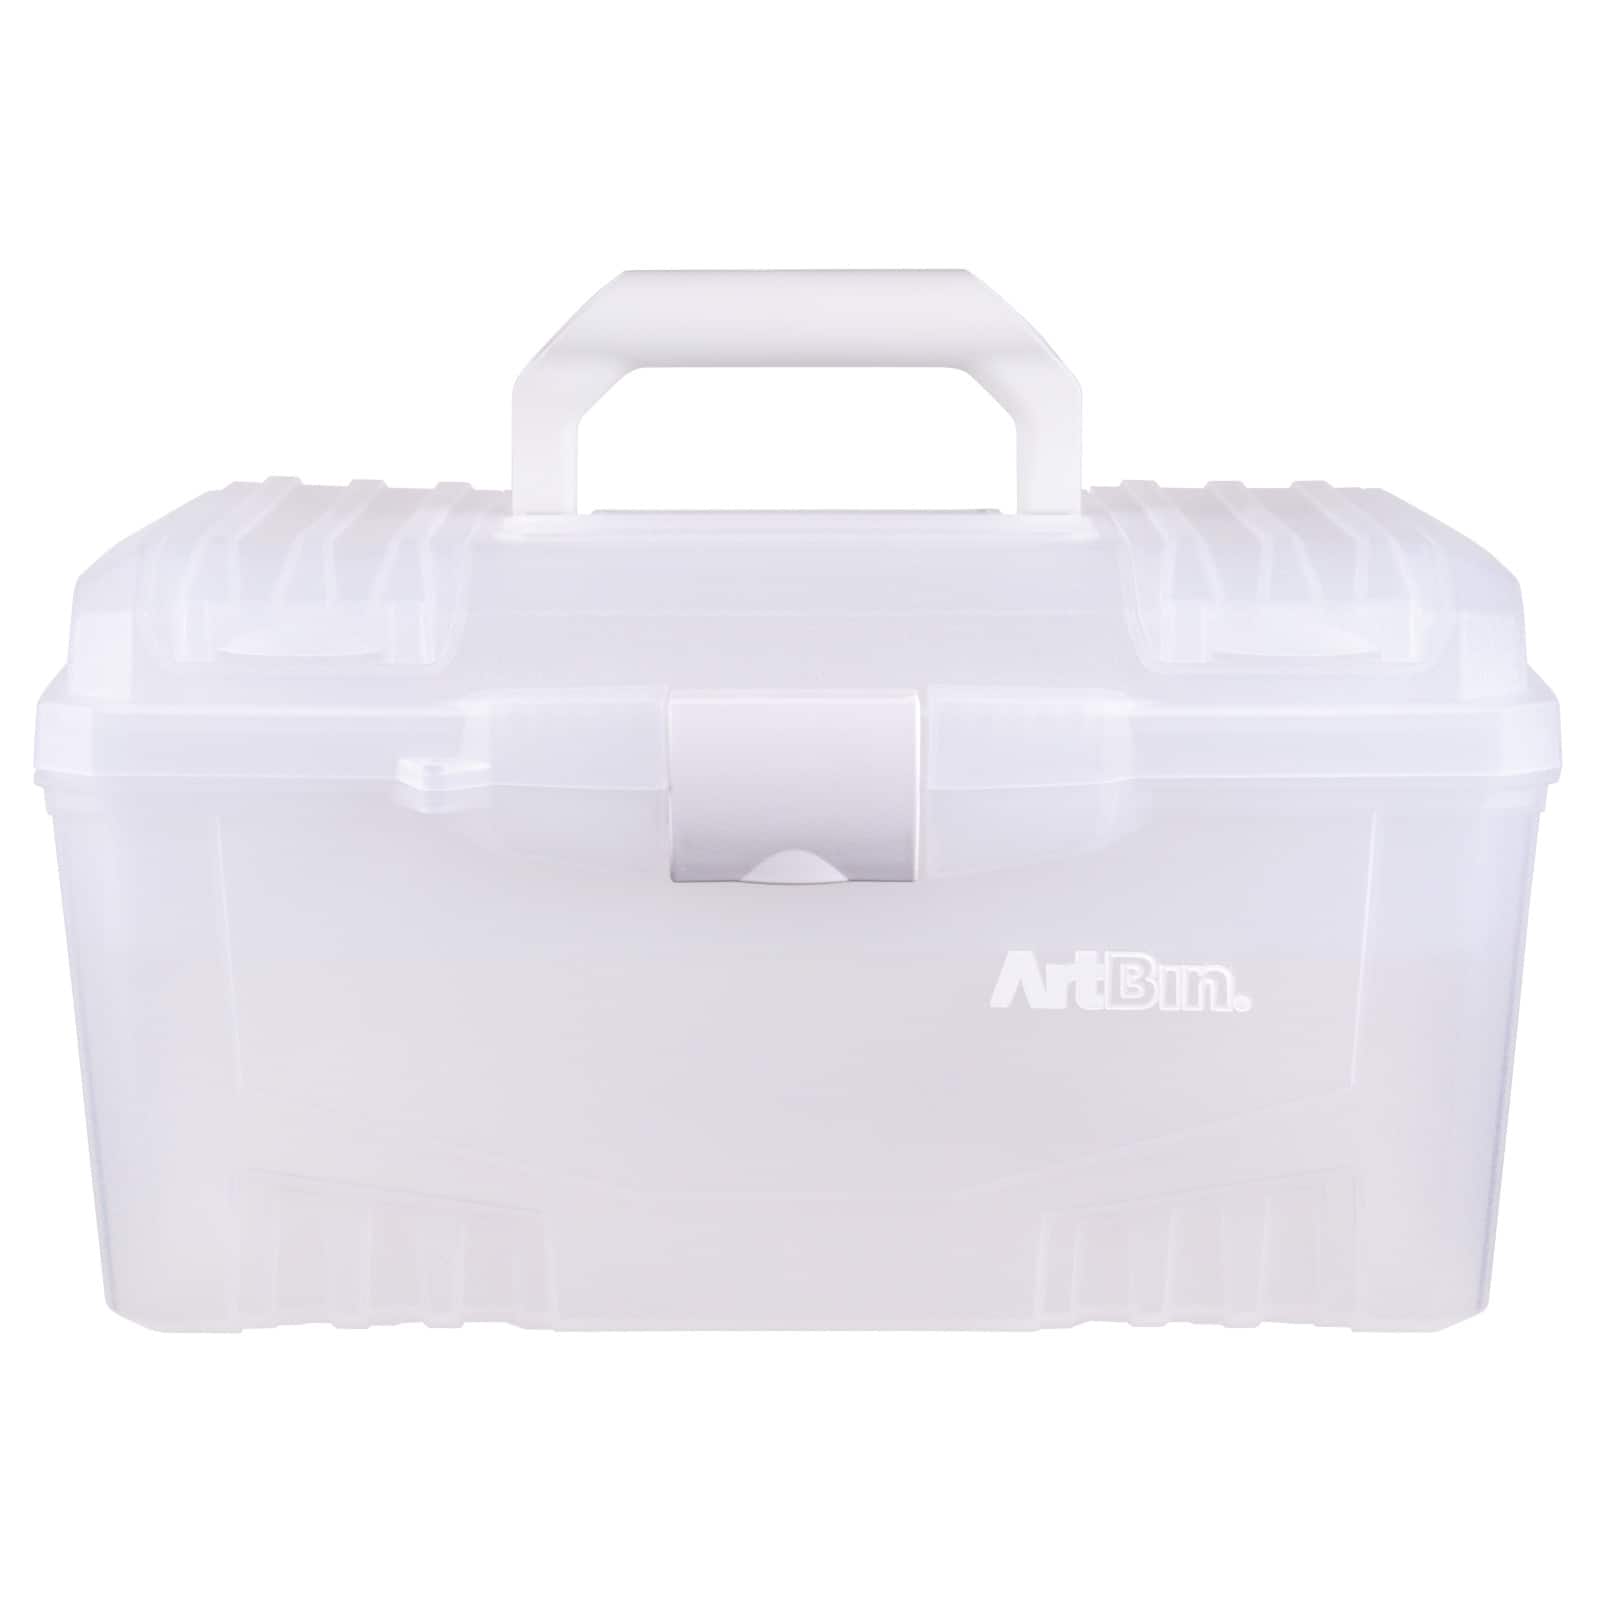 Artbin Storage Box Twin Top/Tray